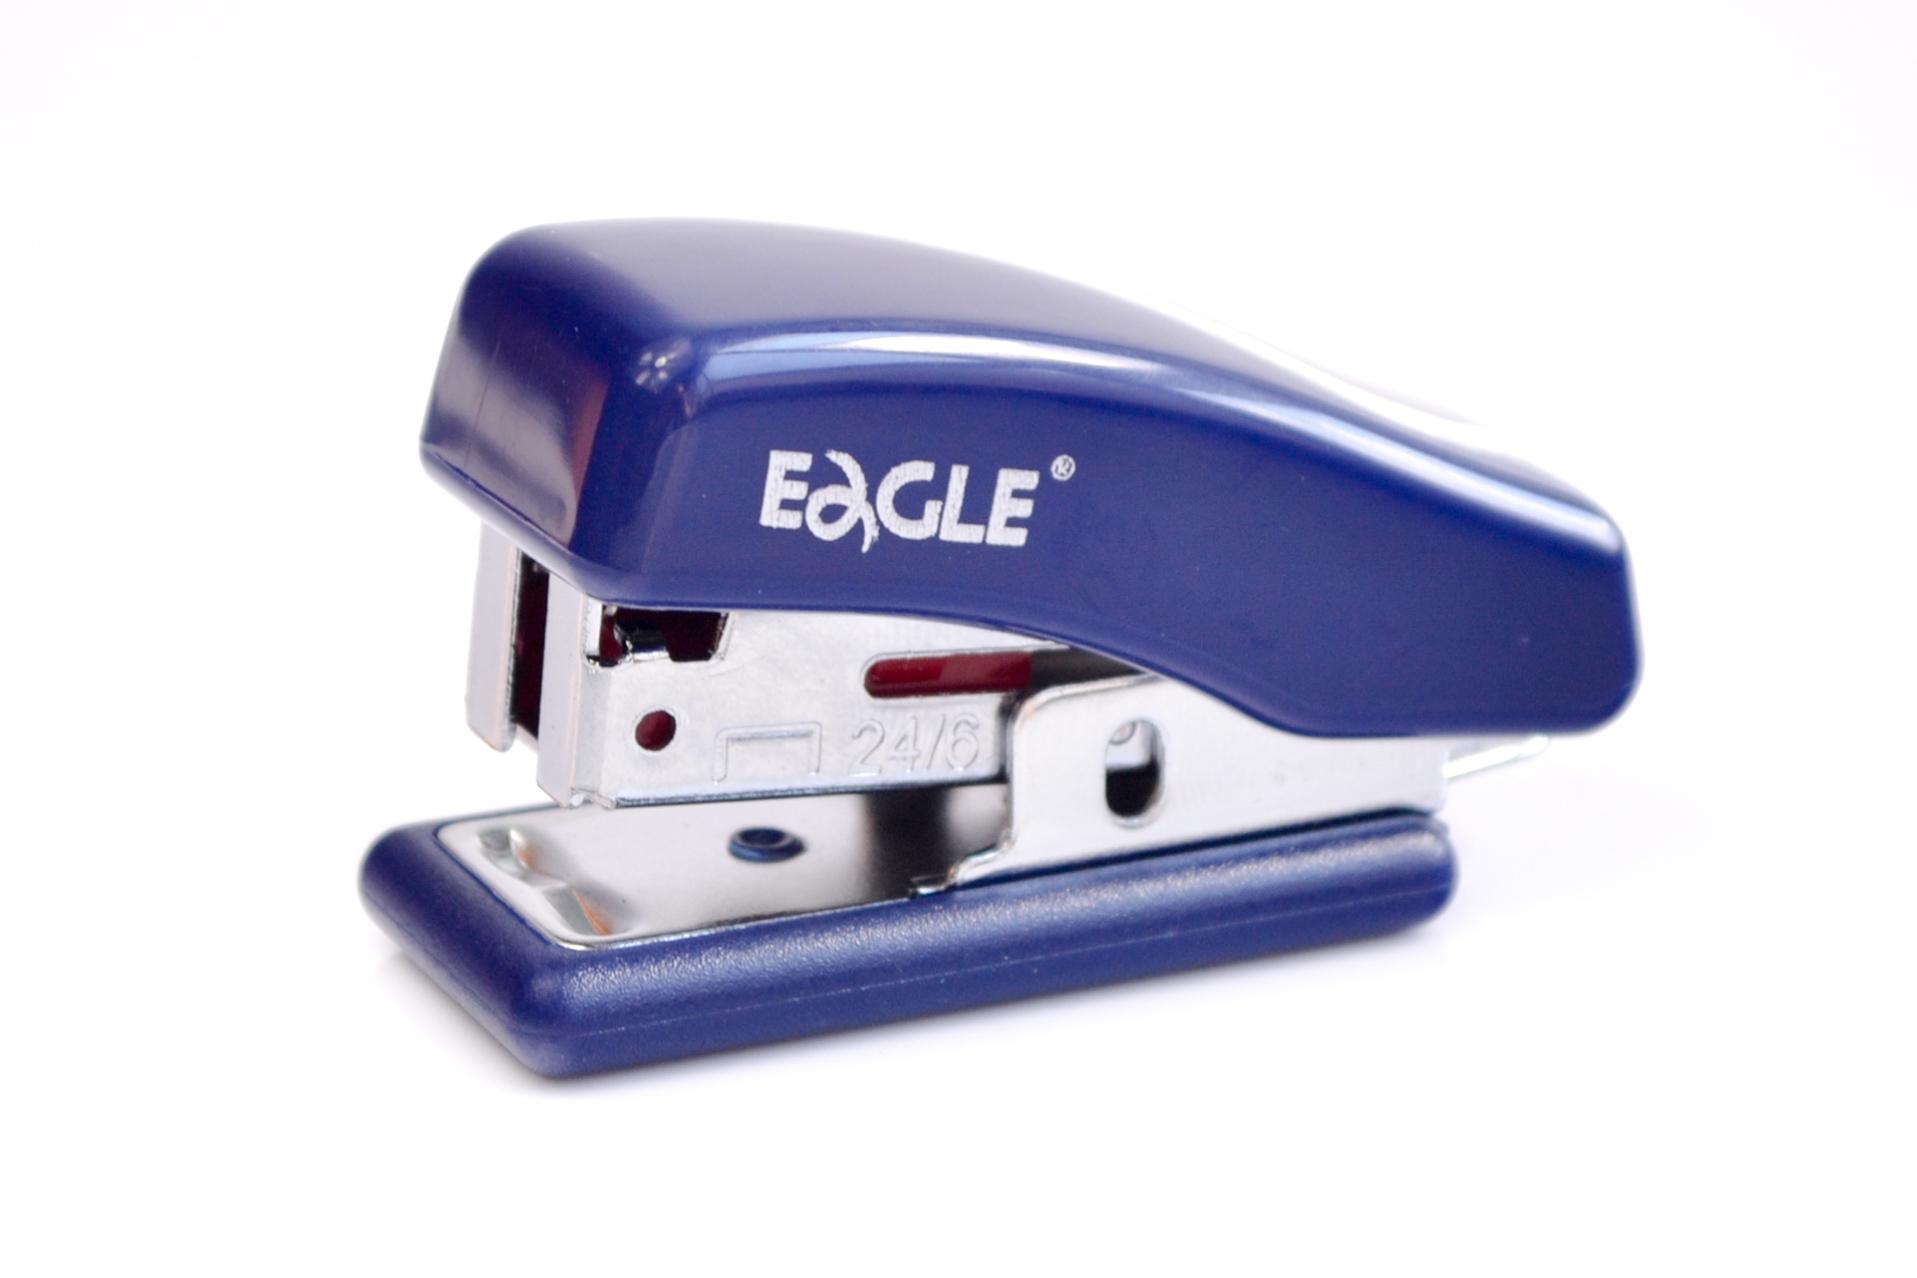 Grapadora Eagle 868 Mini